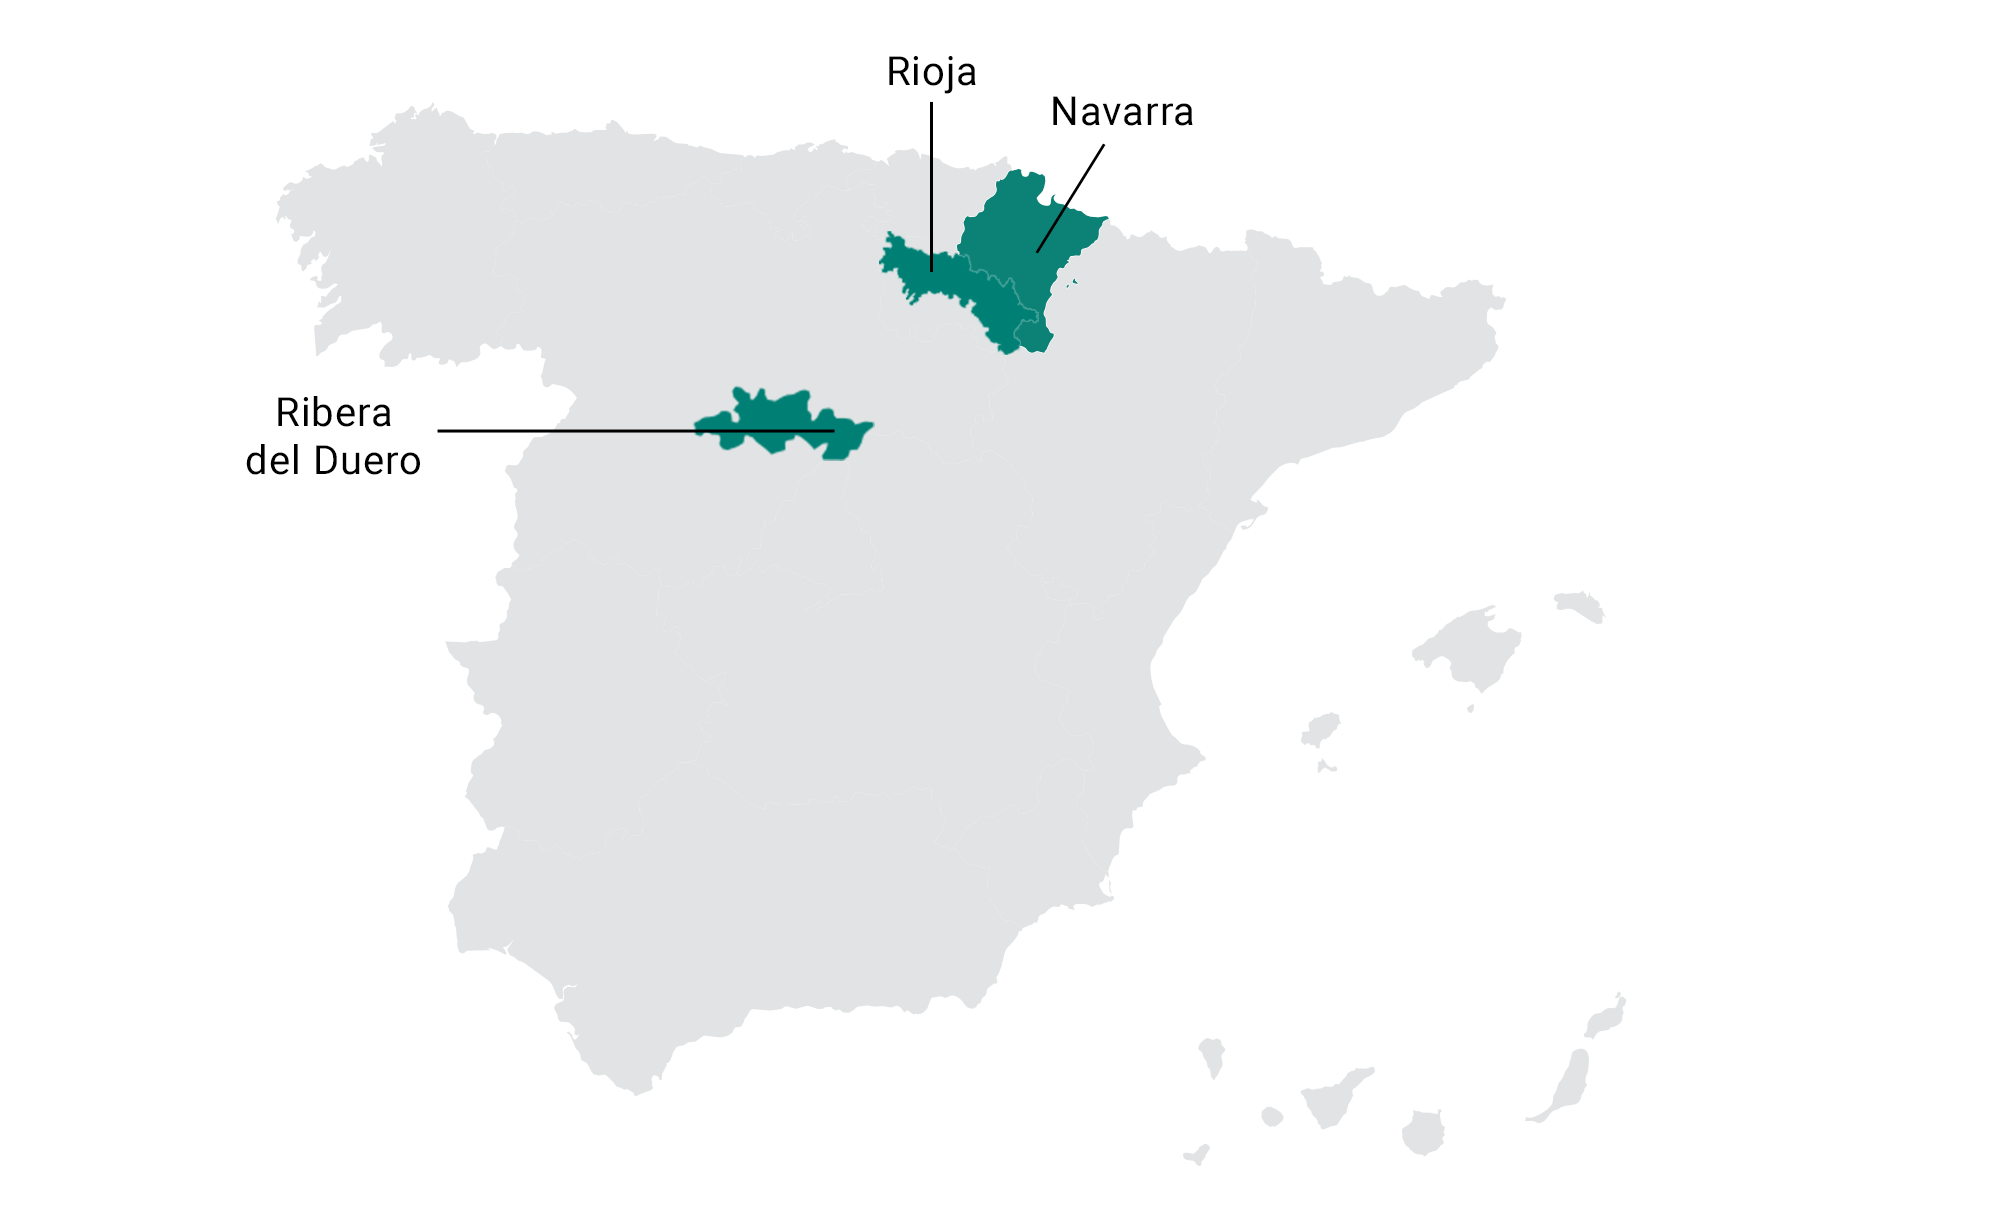 spain map of tempranillo growing regions: Rioja, Navarra, Ribera del Duero